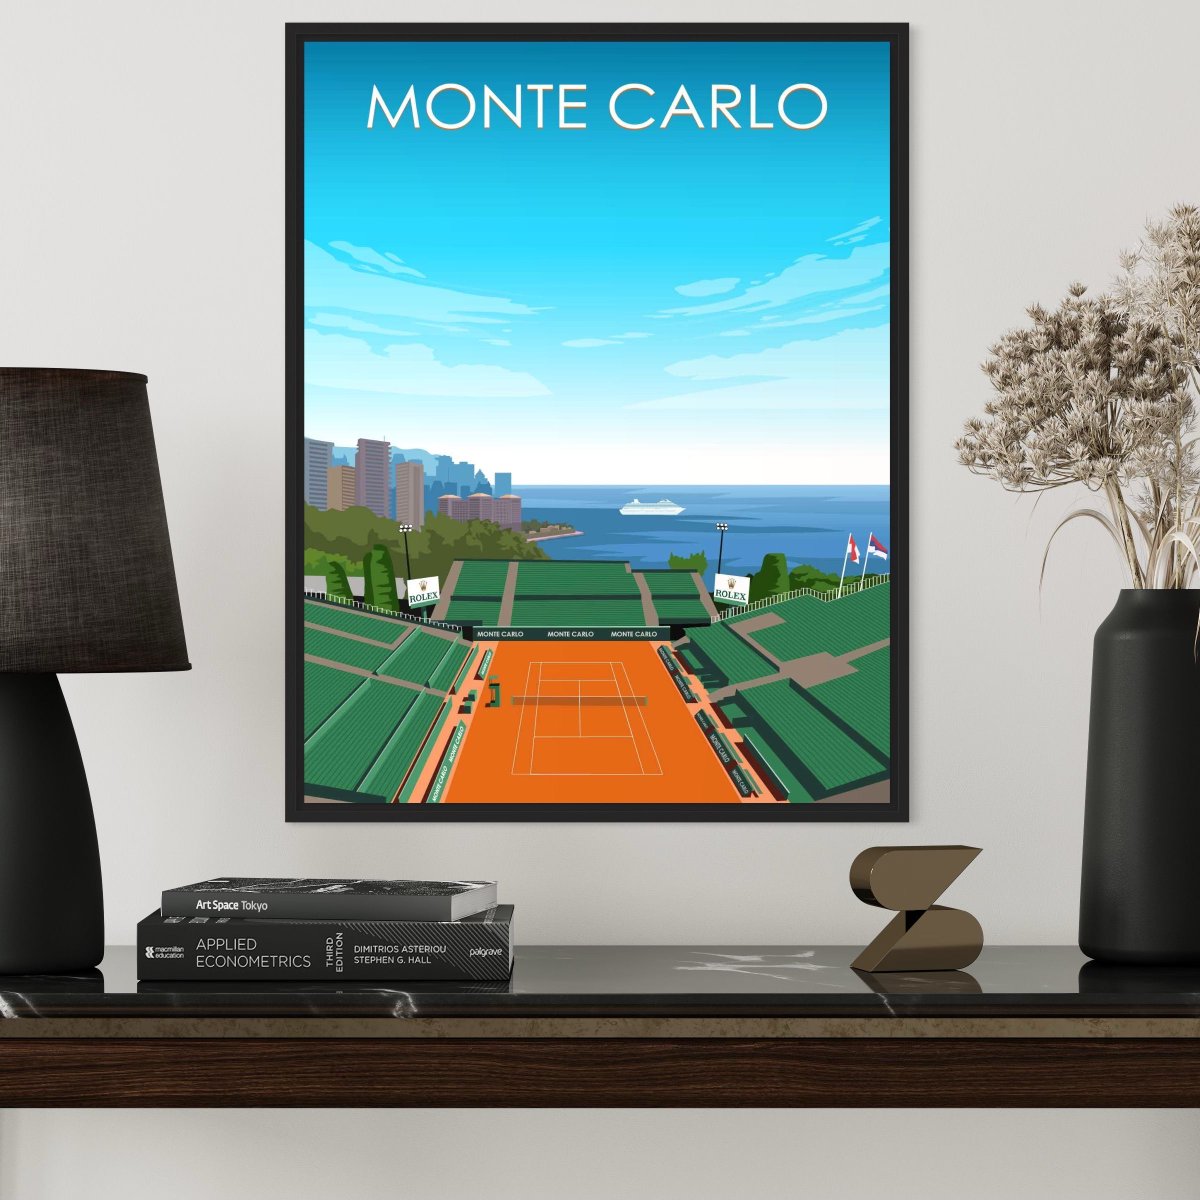 🎾Welcome to the French Riviera🎾
Grab your Monte Carlo 1000 poster now

#miami
#palmsprings
#indianwells
#tennisparadise
#hardrockstadium
#travelposters
#wallart
#travelart
#printsandposters
#idealgift